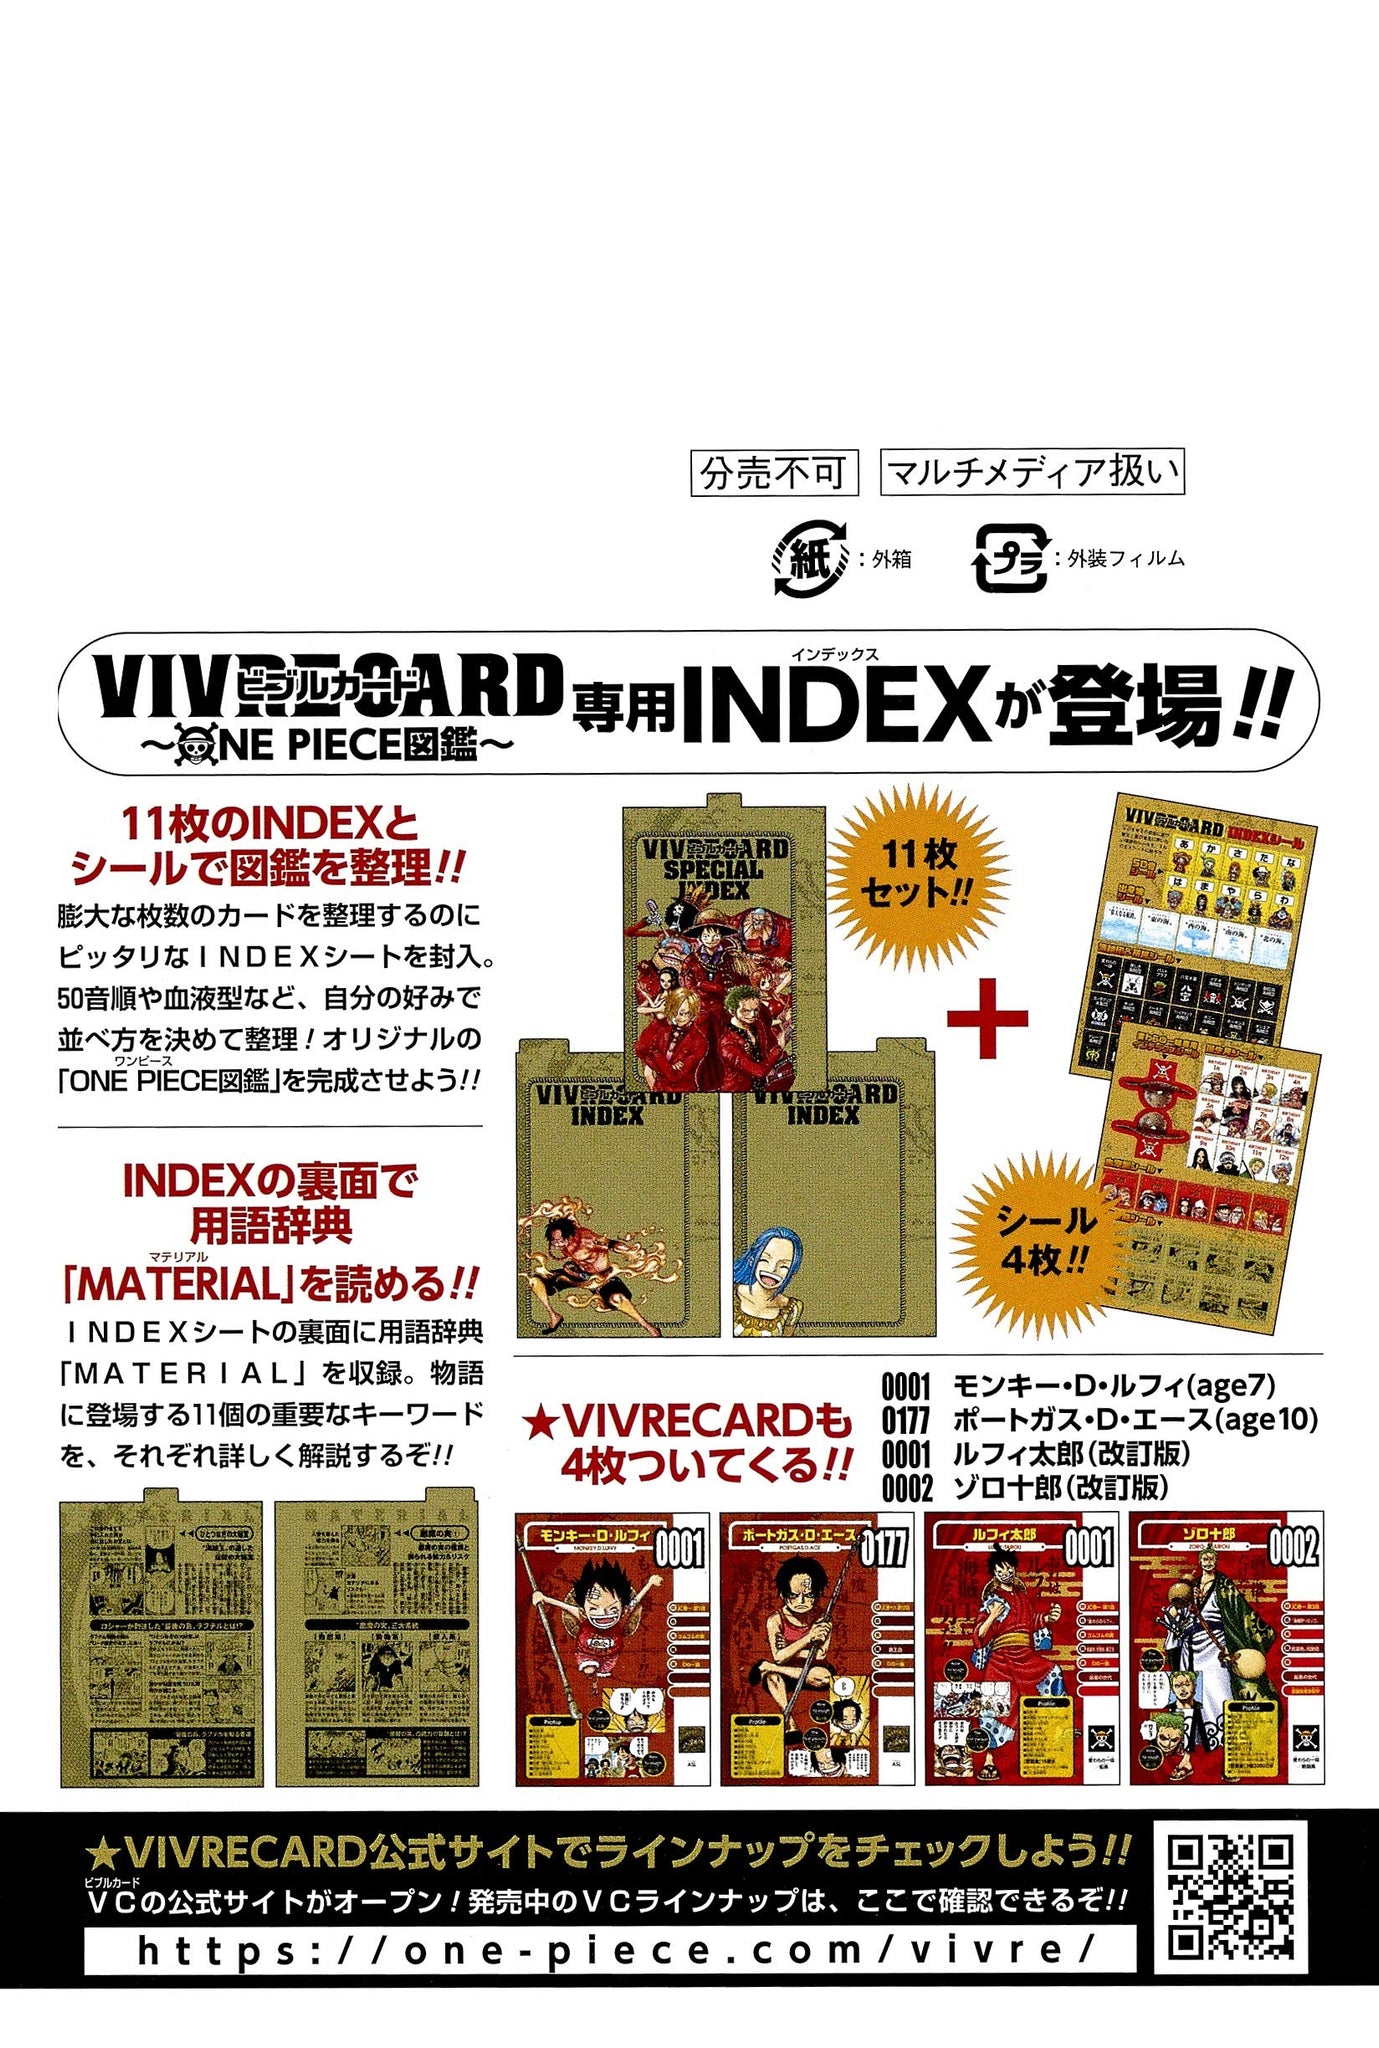 Vivre Card One Piece Visual Dictionary Index Set Japanese Book Store